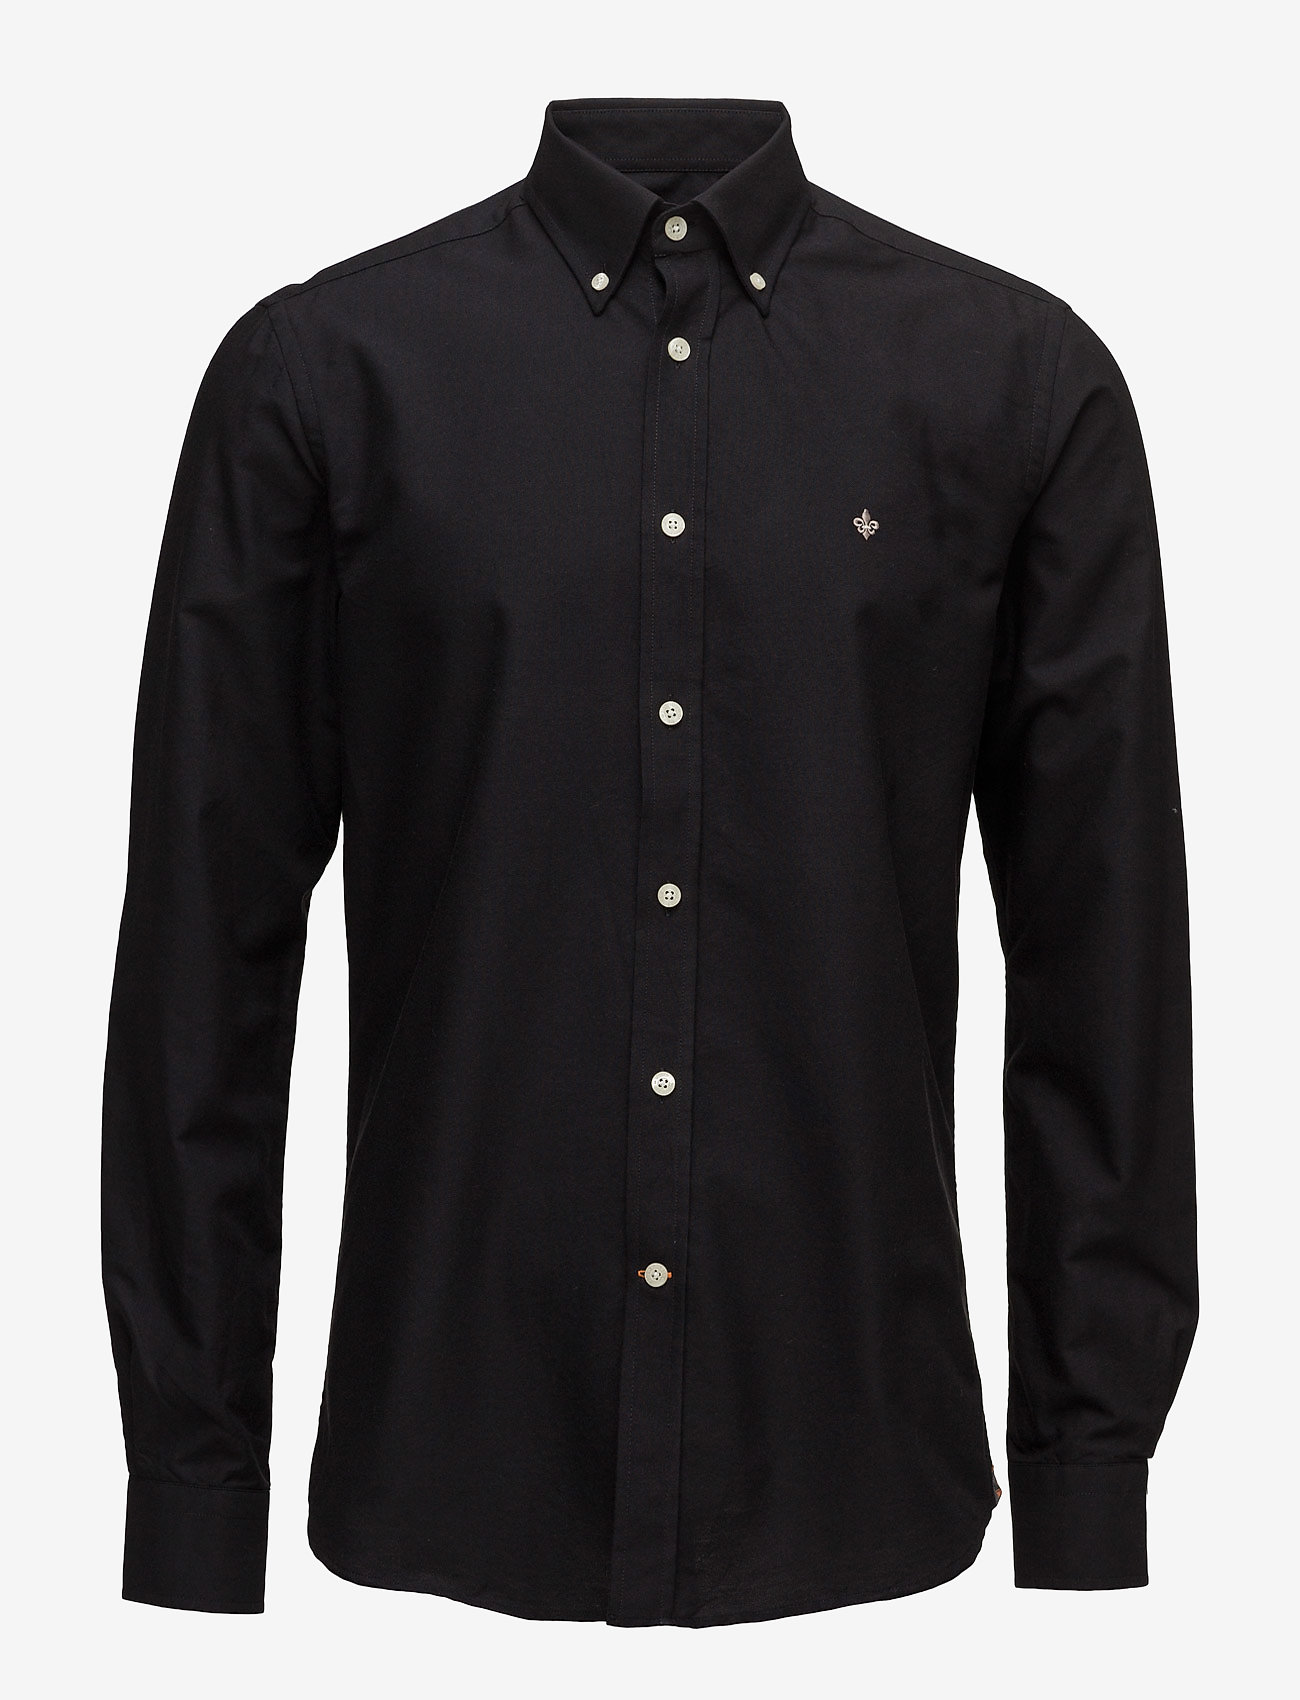 Morris - Douglas Shirt-Slim Fit - peruskauluspaidat - black - 0